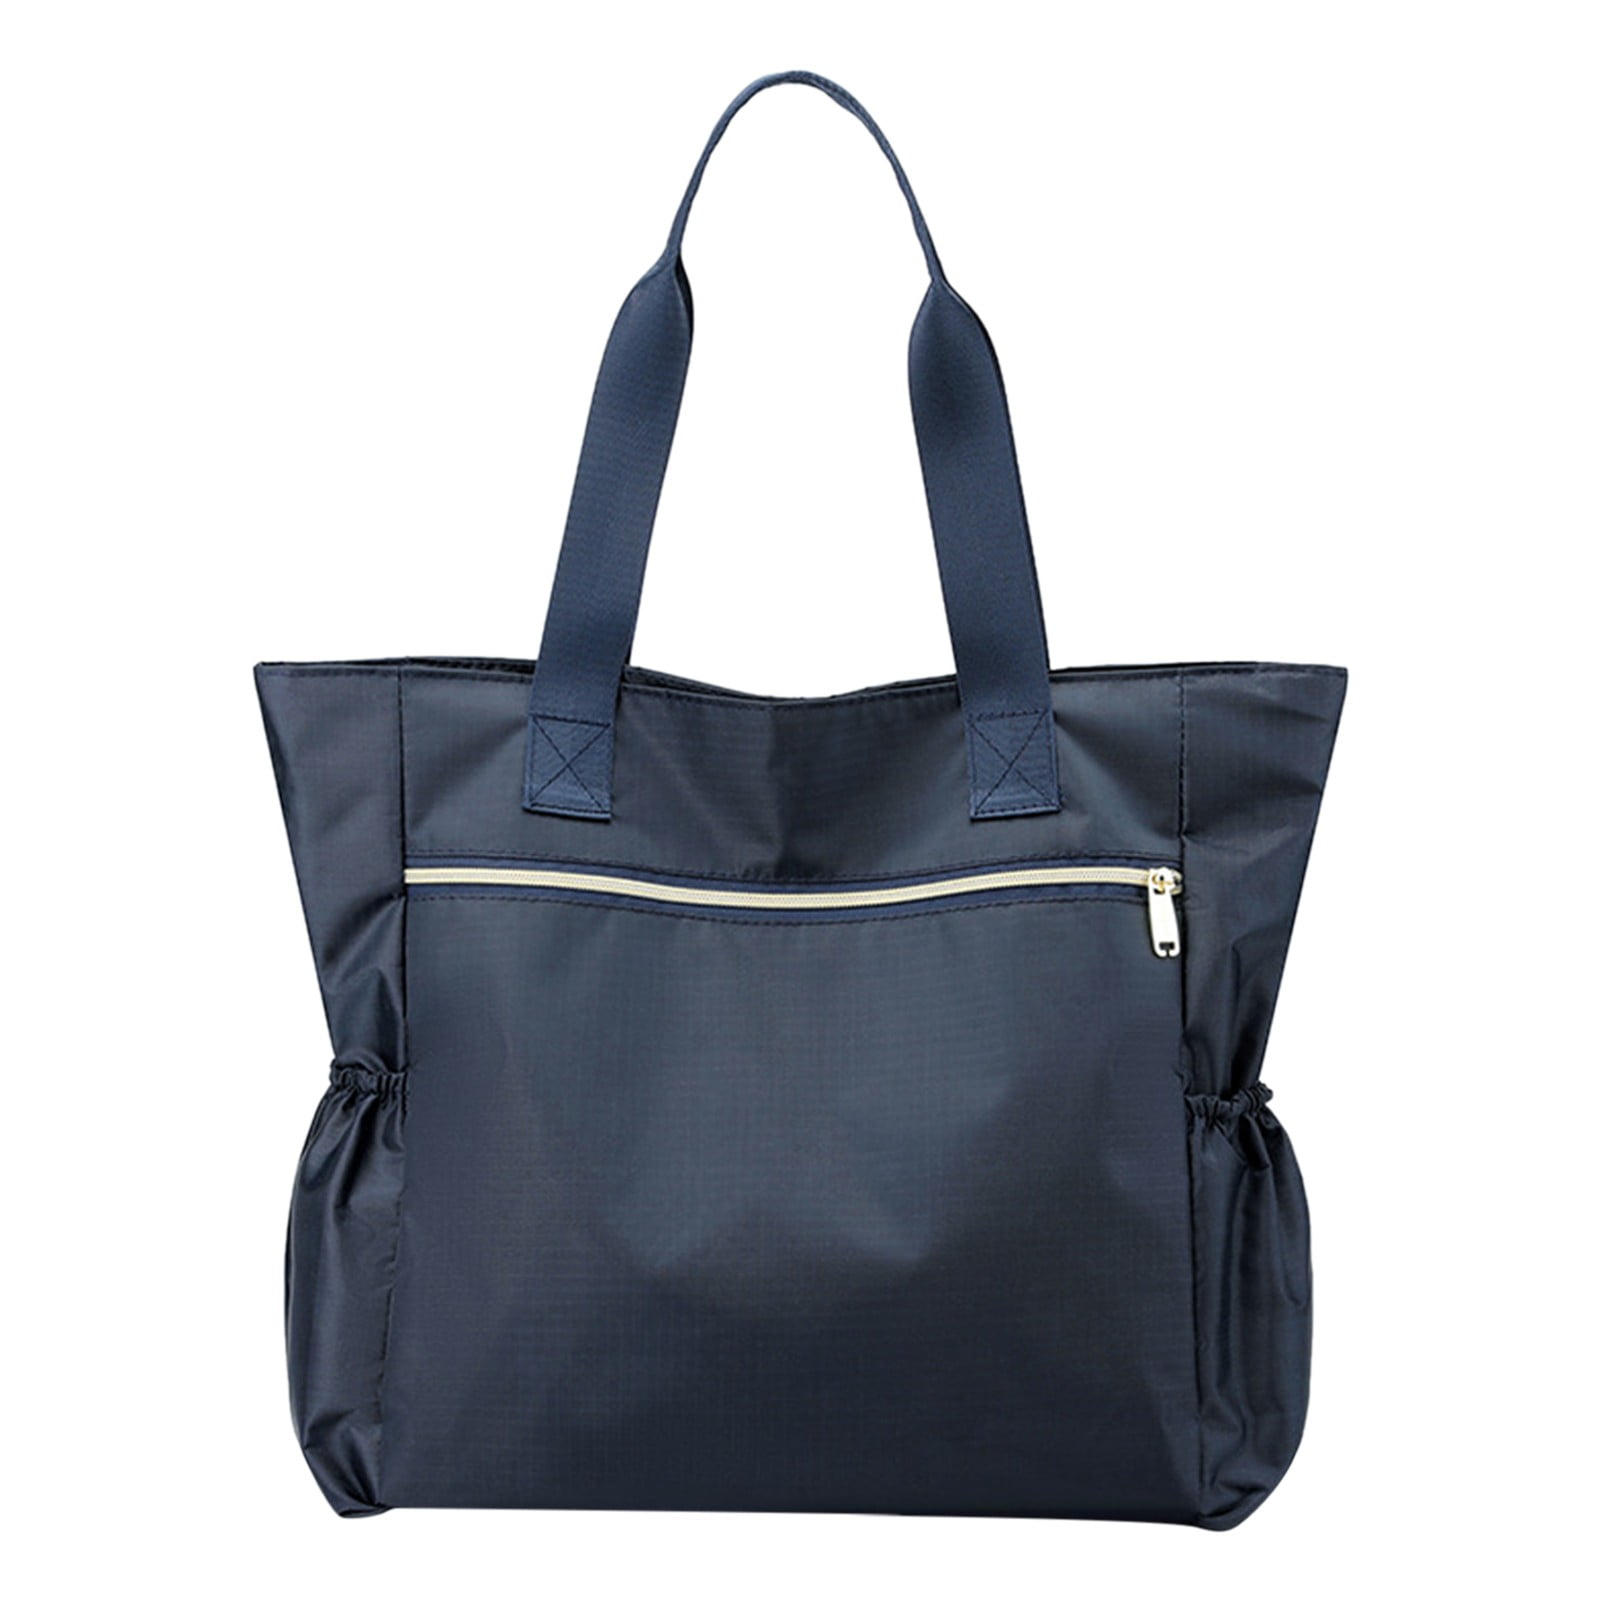 Buy Collsants Nylon Lightweight Handbag for Women Waterproof Tote Shoulder  Purses Bag, Xx, Large at Amazon.in